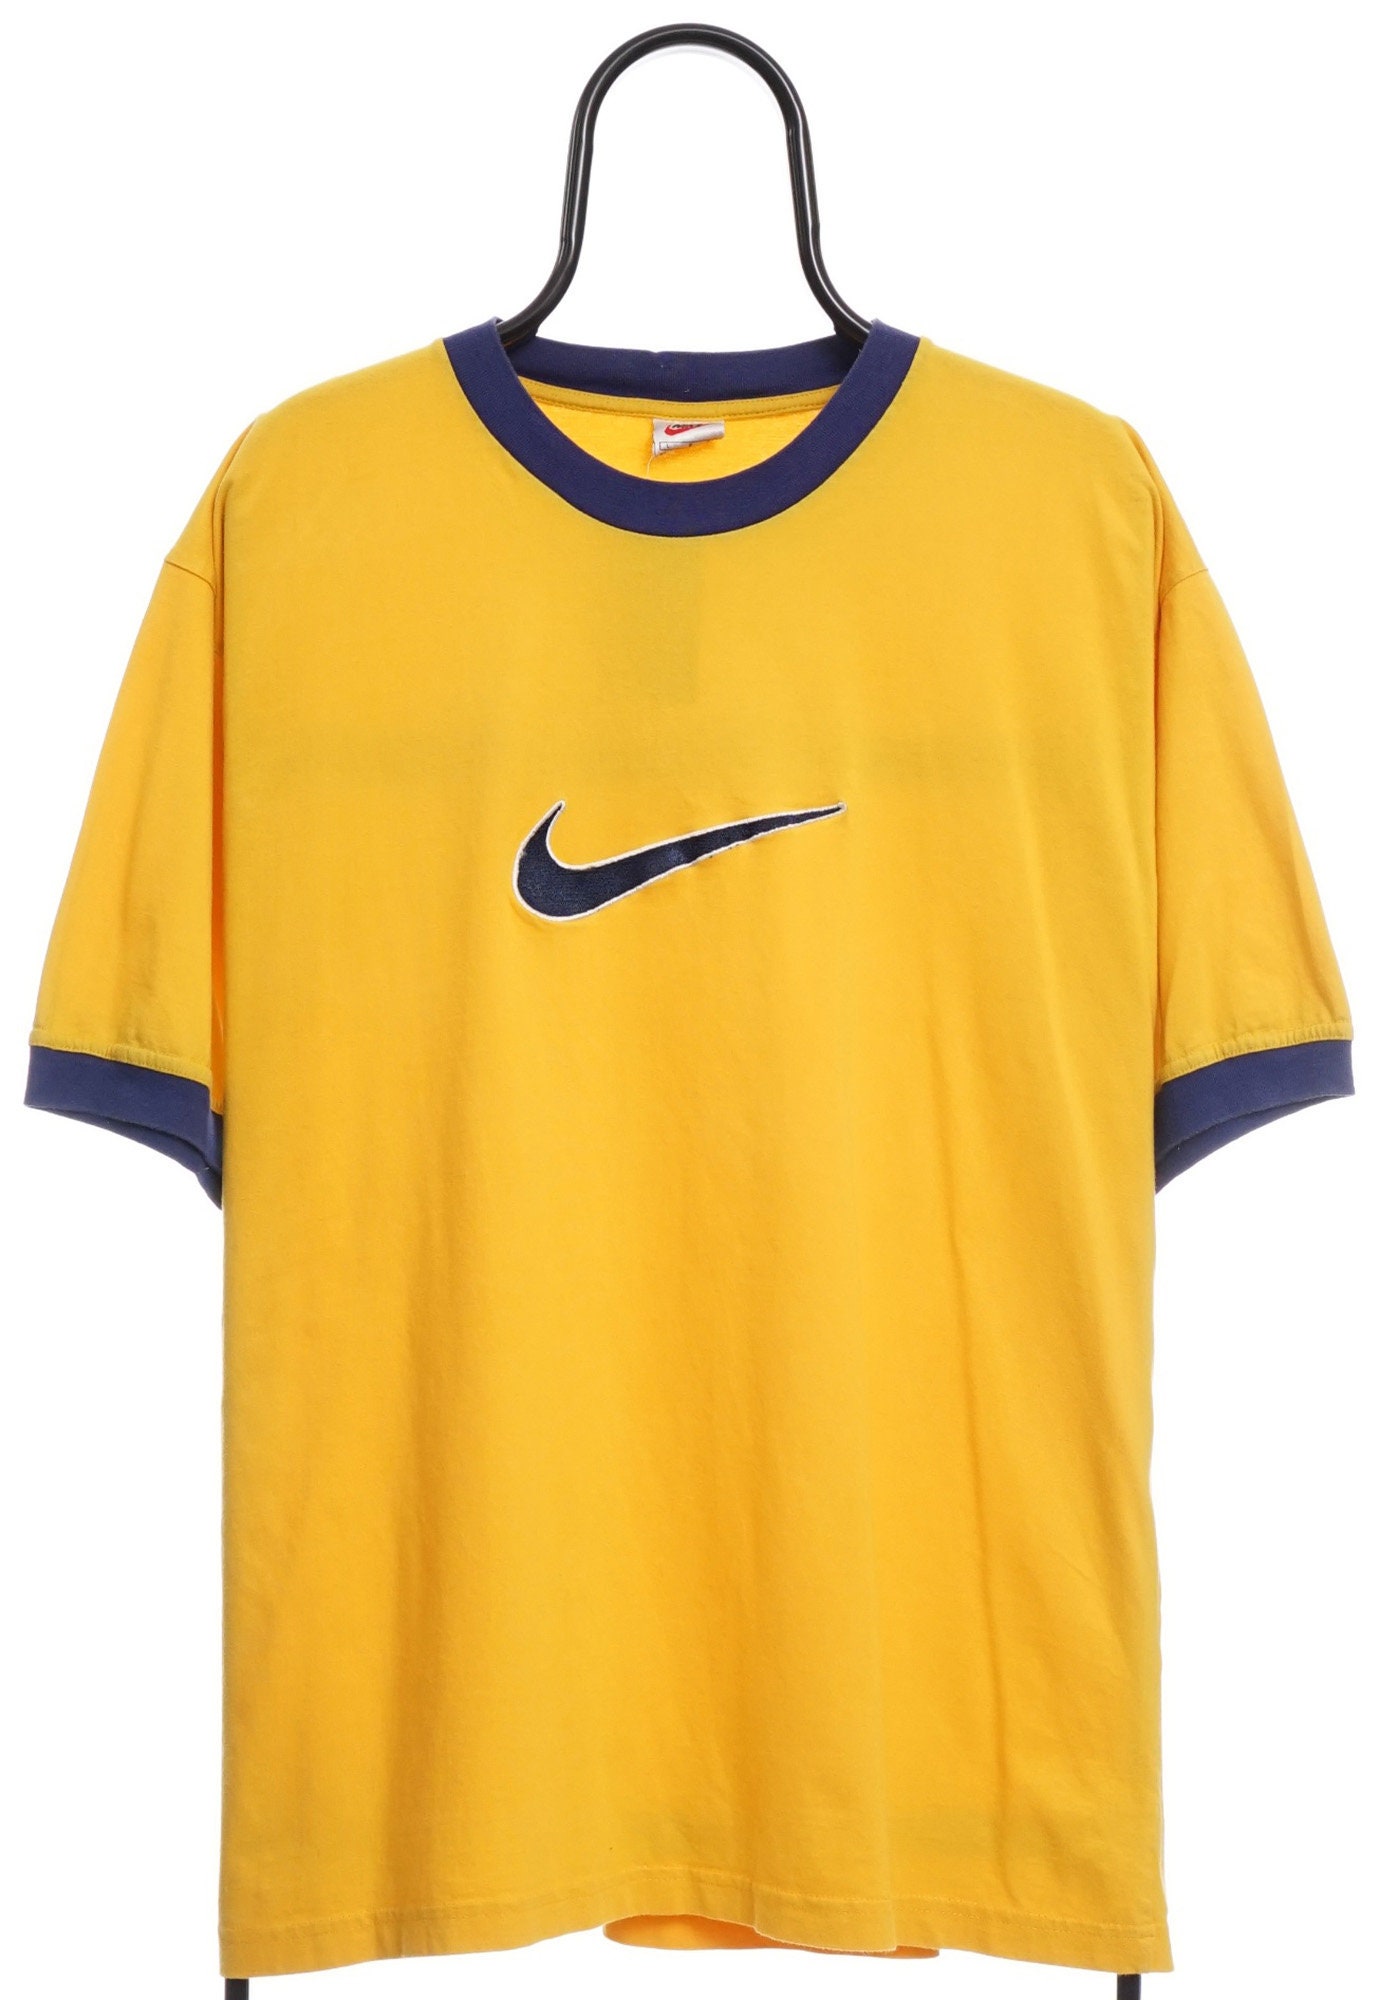 Yellow Nike Shirt - Etsy